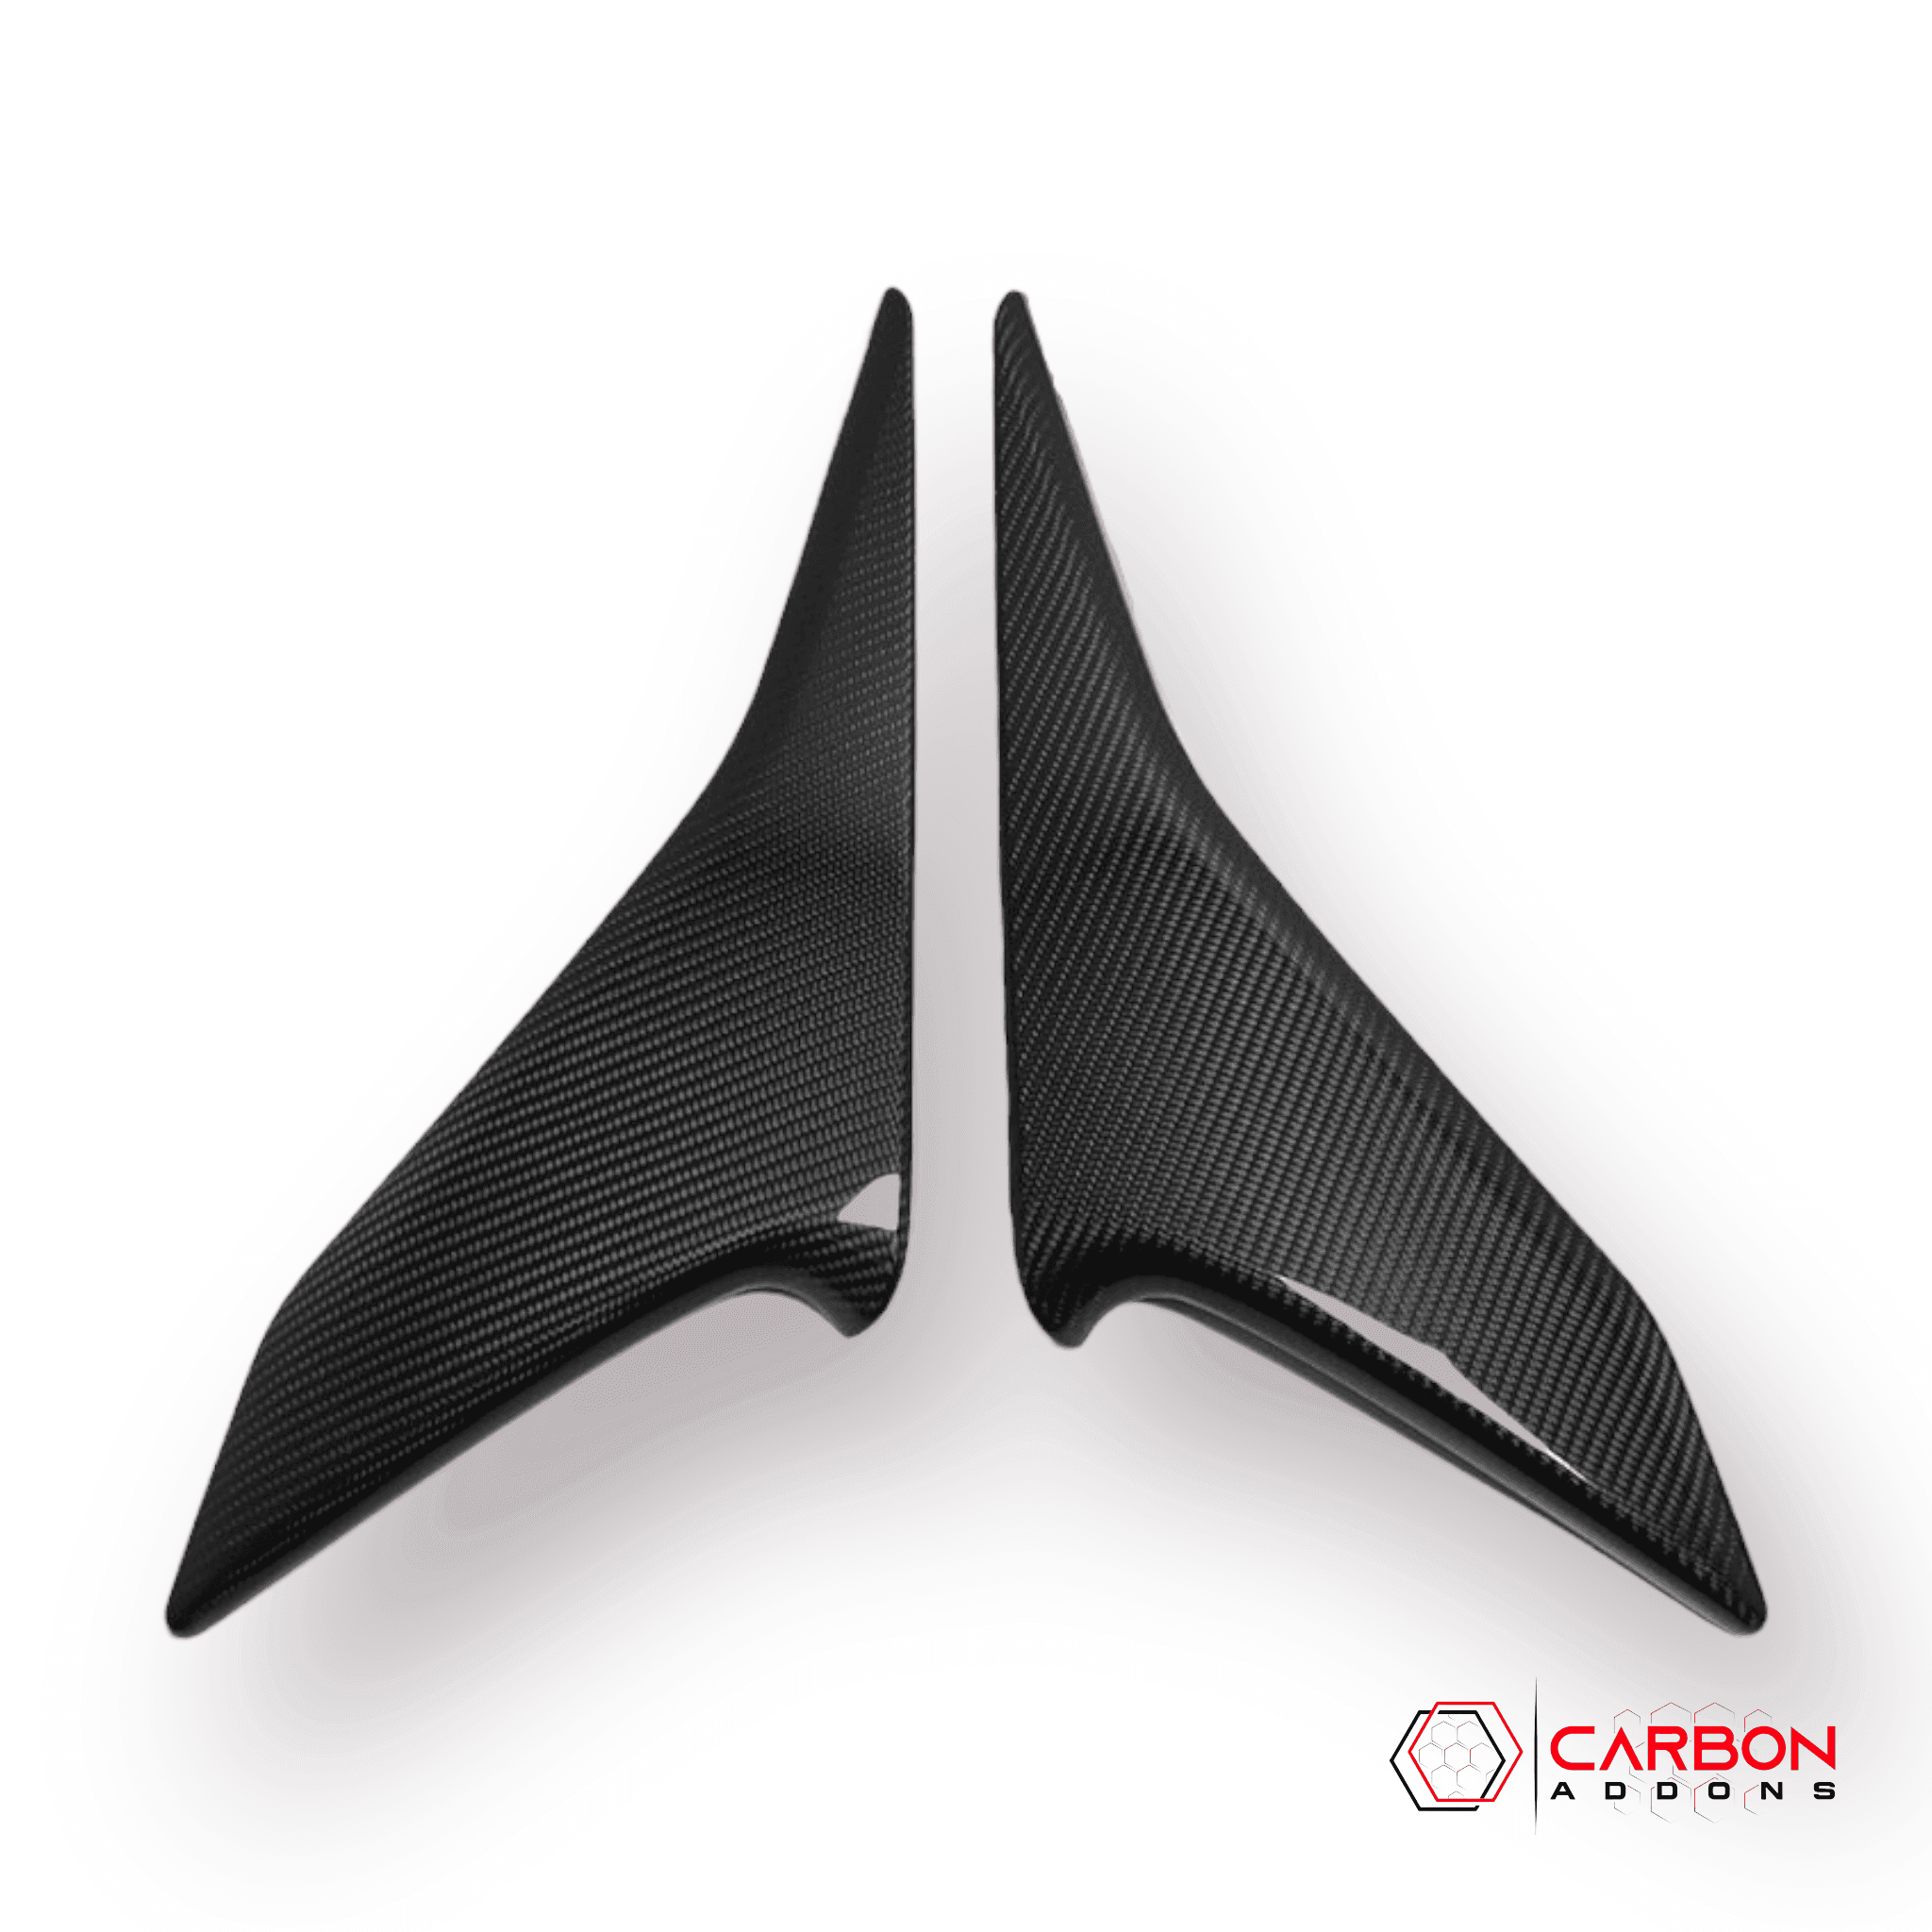 C8 Corvette 2020+ Real Carbon Fiber Lower Door Panel Trim Cover - carbonaddons Carbon Fiber Parts, Accessories, Upgrades, Mods